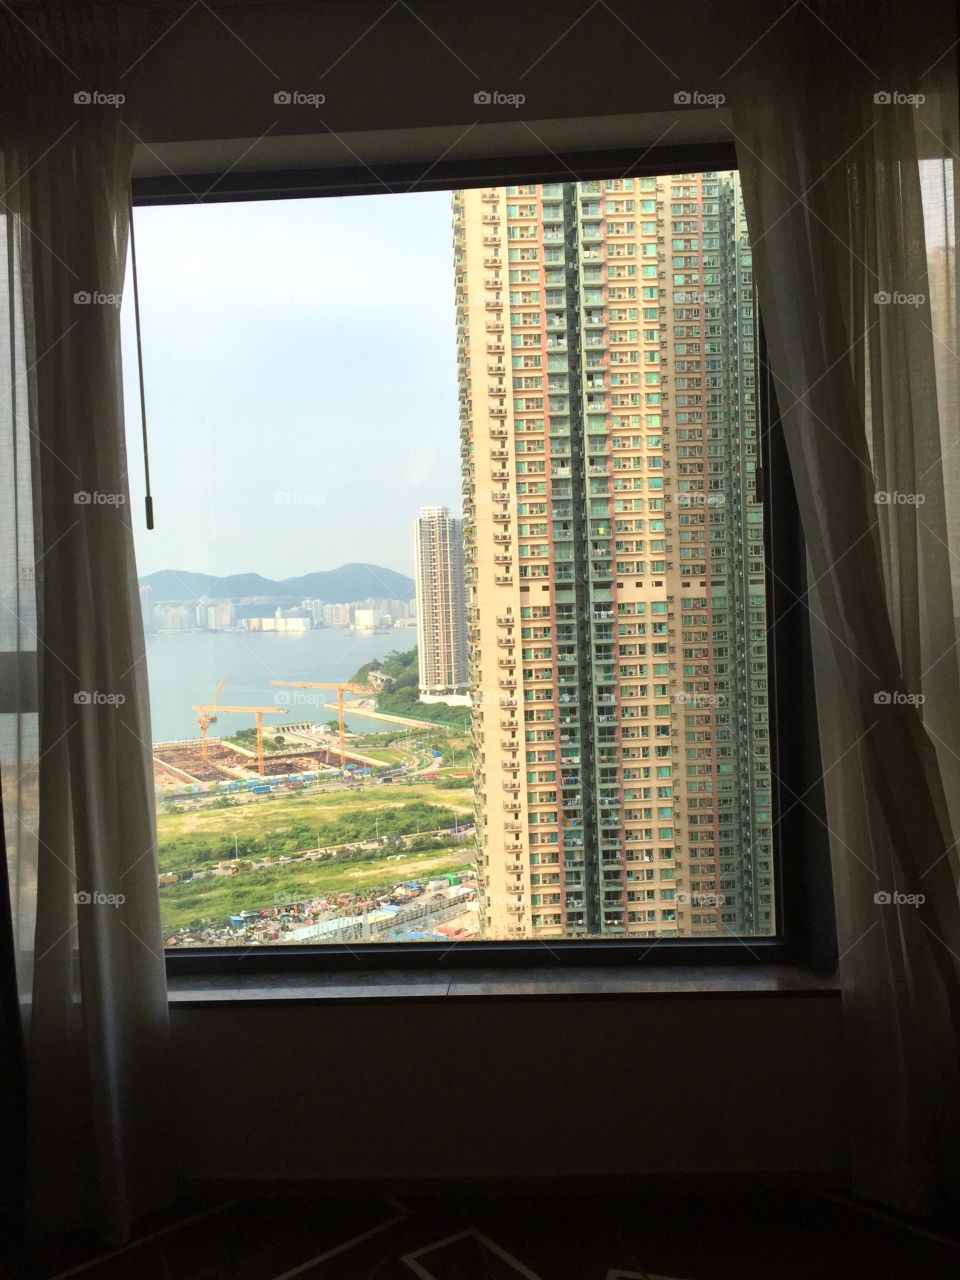 Floor 26 of Hong Kong